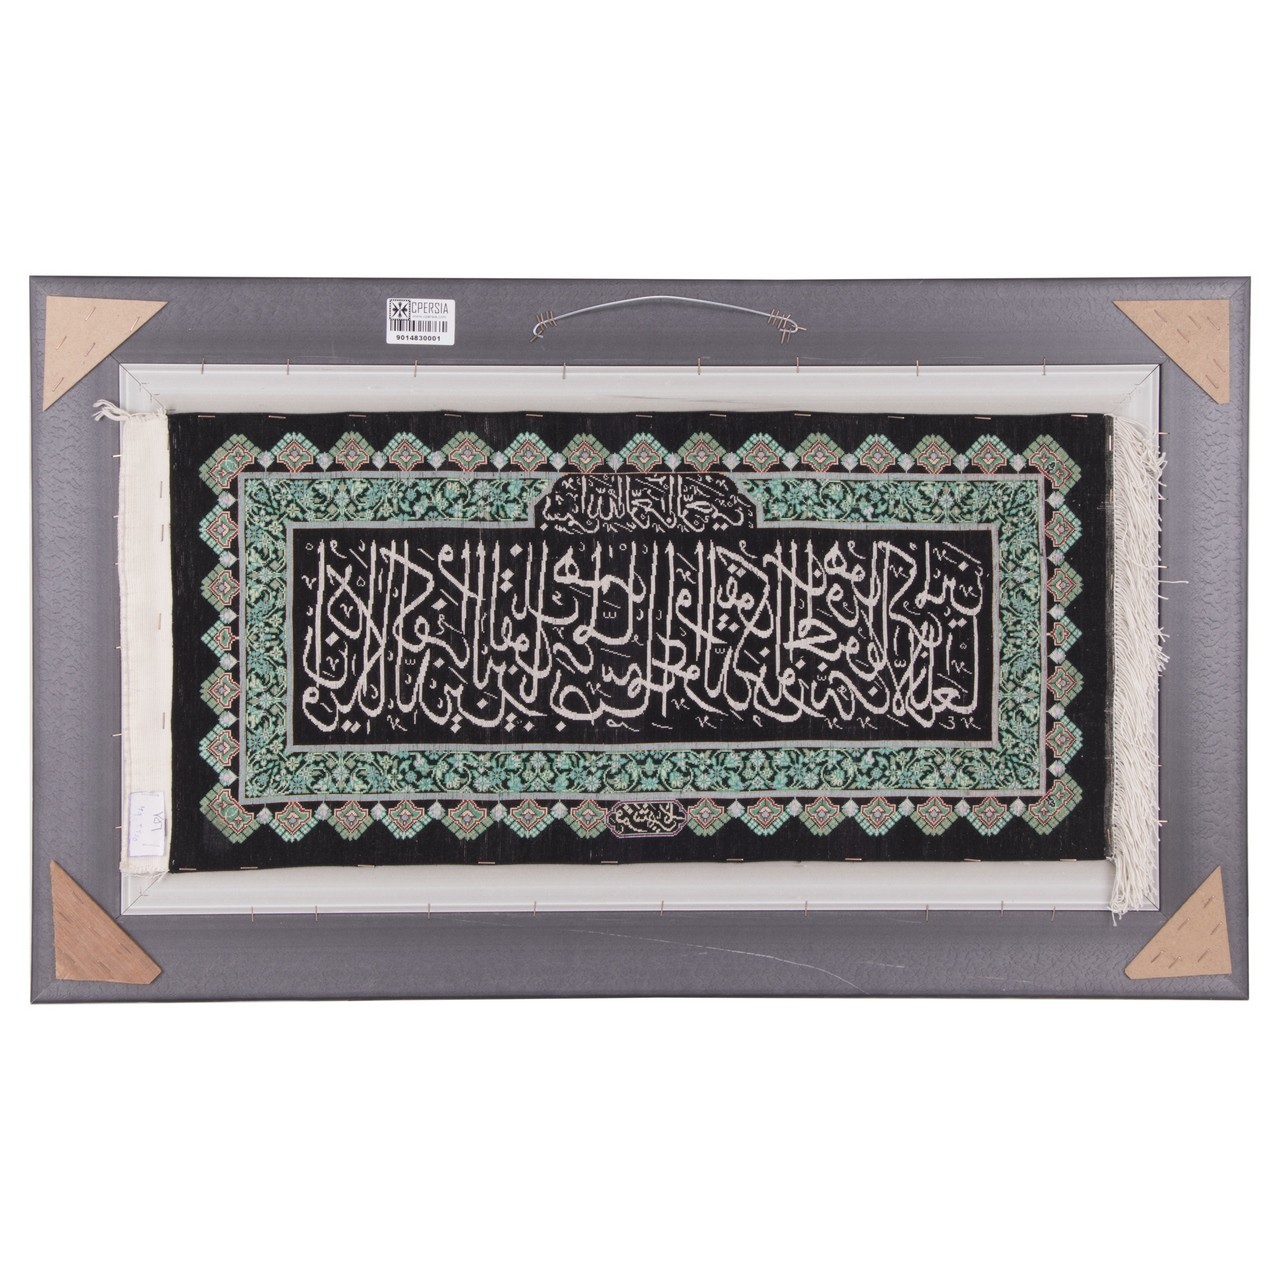 Pictorial Tabriz Carpet Ref: 901483